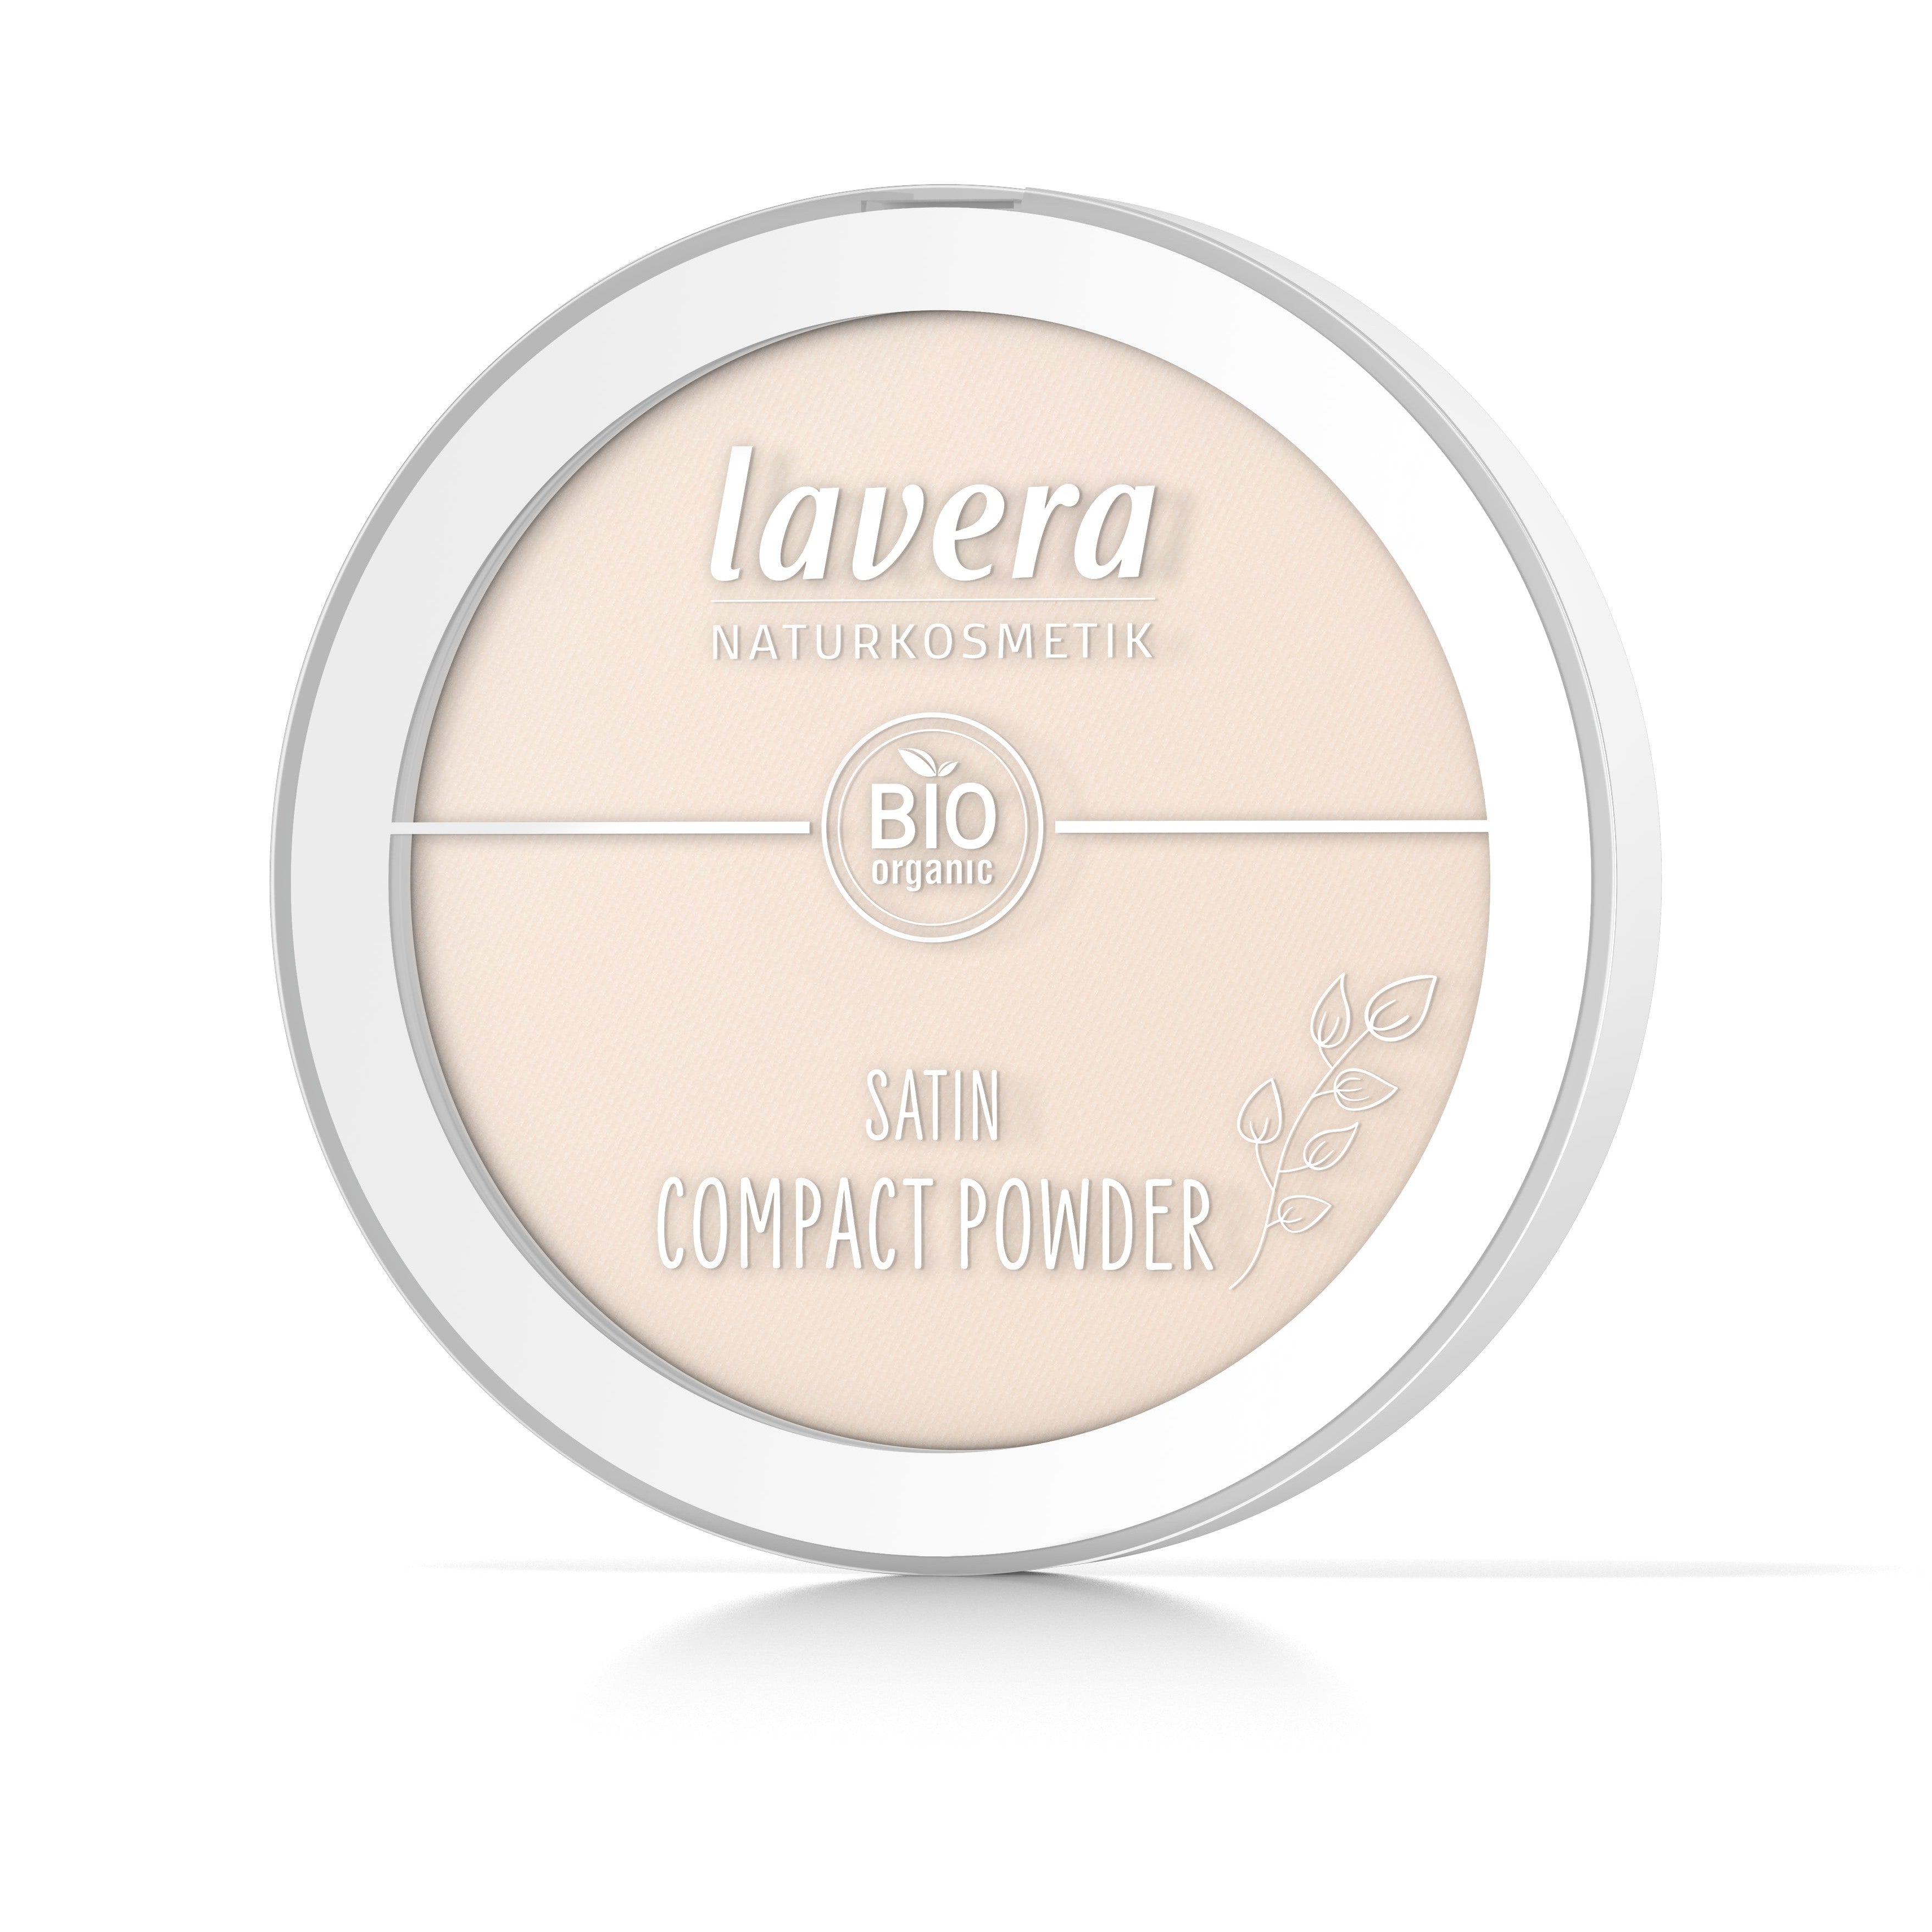 Lavera Satin Compact Powder puuteri, Light 01